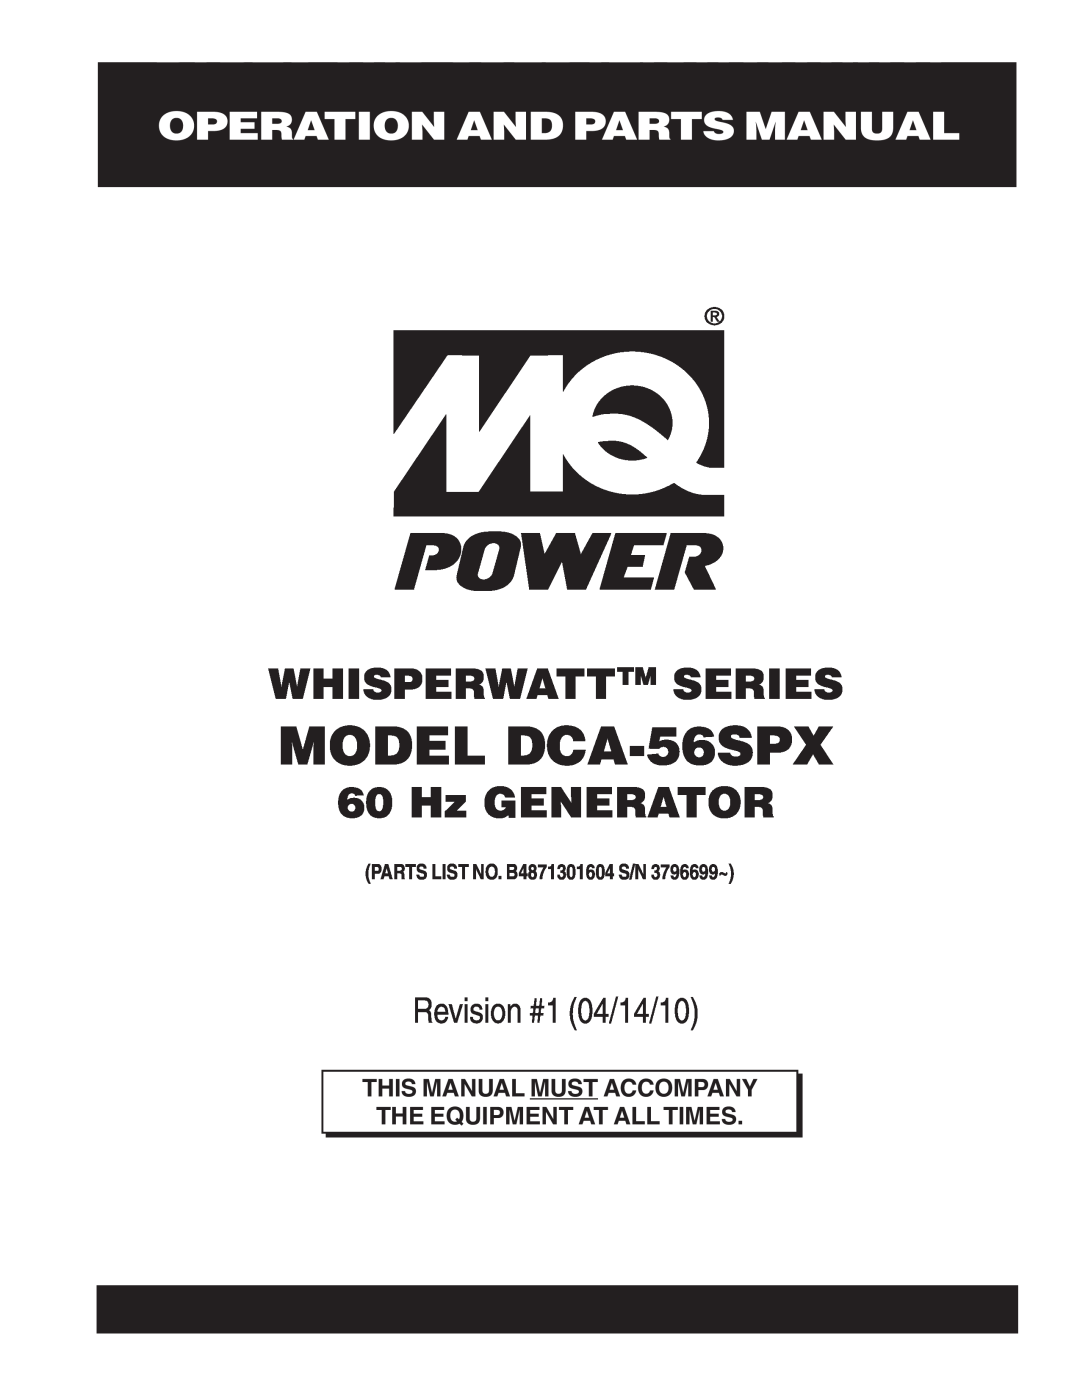 Multiquip operation manual Operation And Parts Manual, MODEL DCA-56SPX, Whisperwatttm Series, Hz GENERATOR 